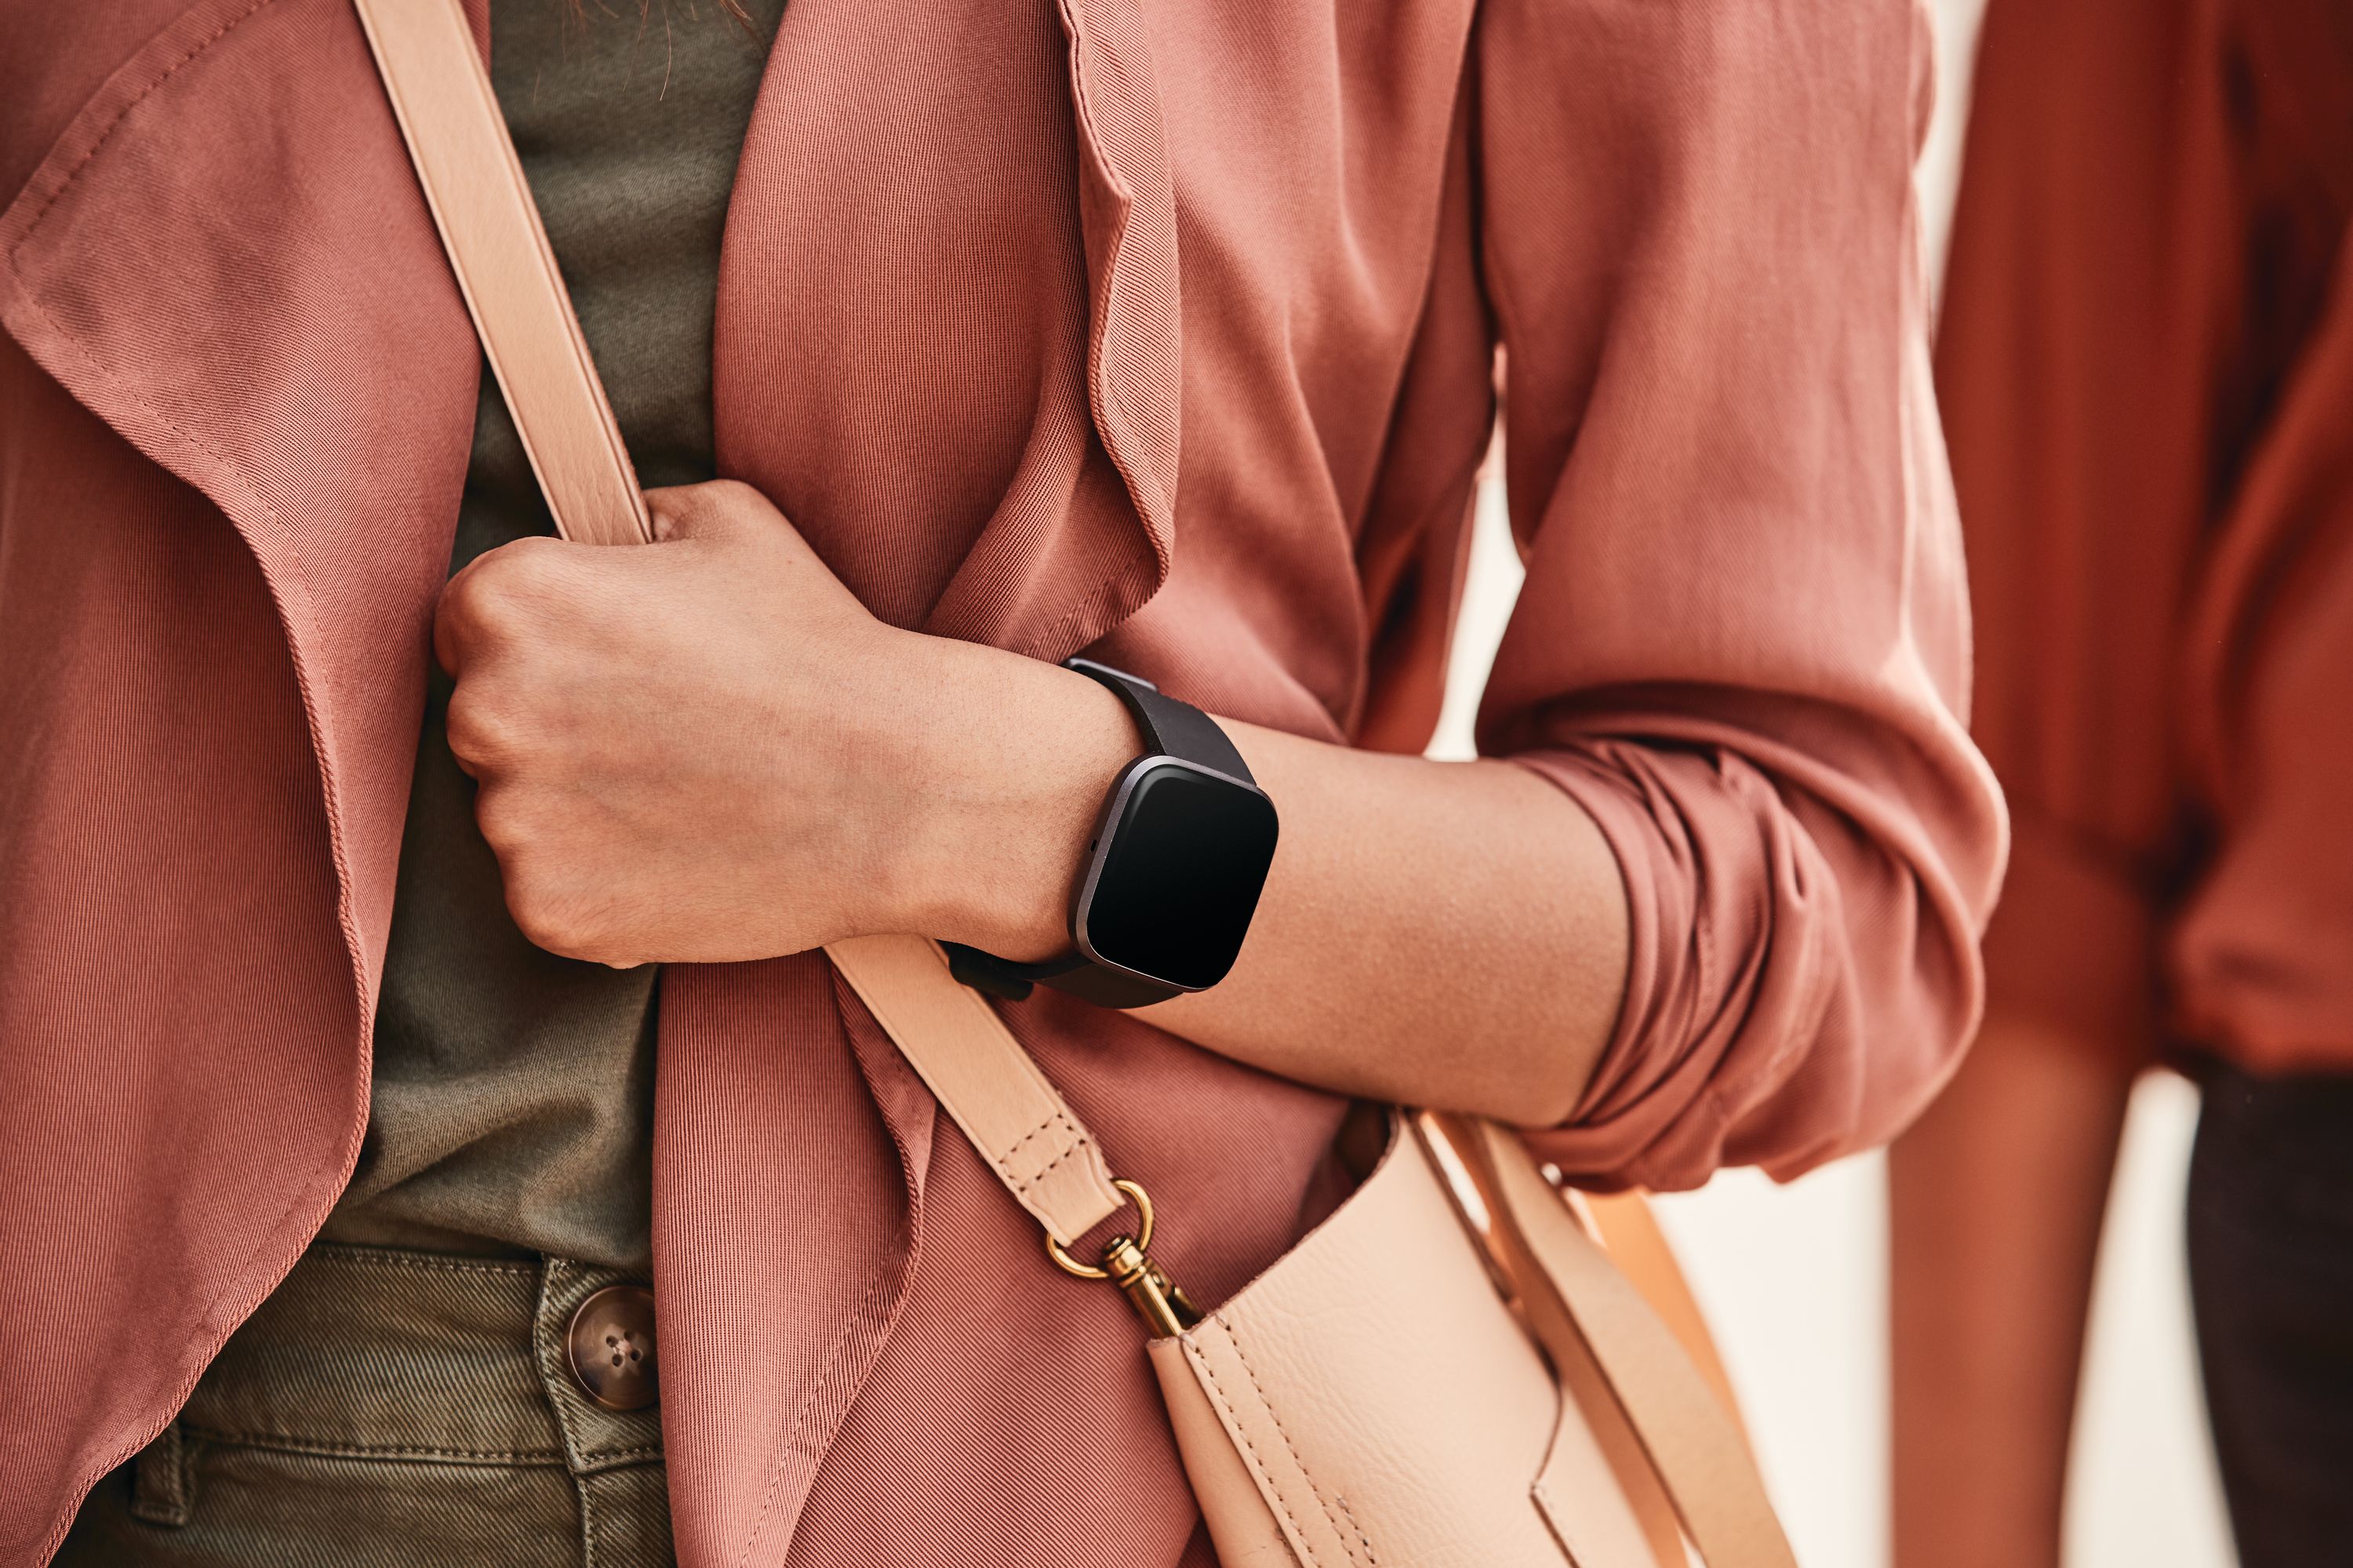 Fitbit Versa 2 Health & Fitness Smartwatch - Black/Carbon Aluminum - image 3 of 6